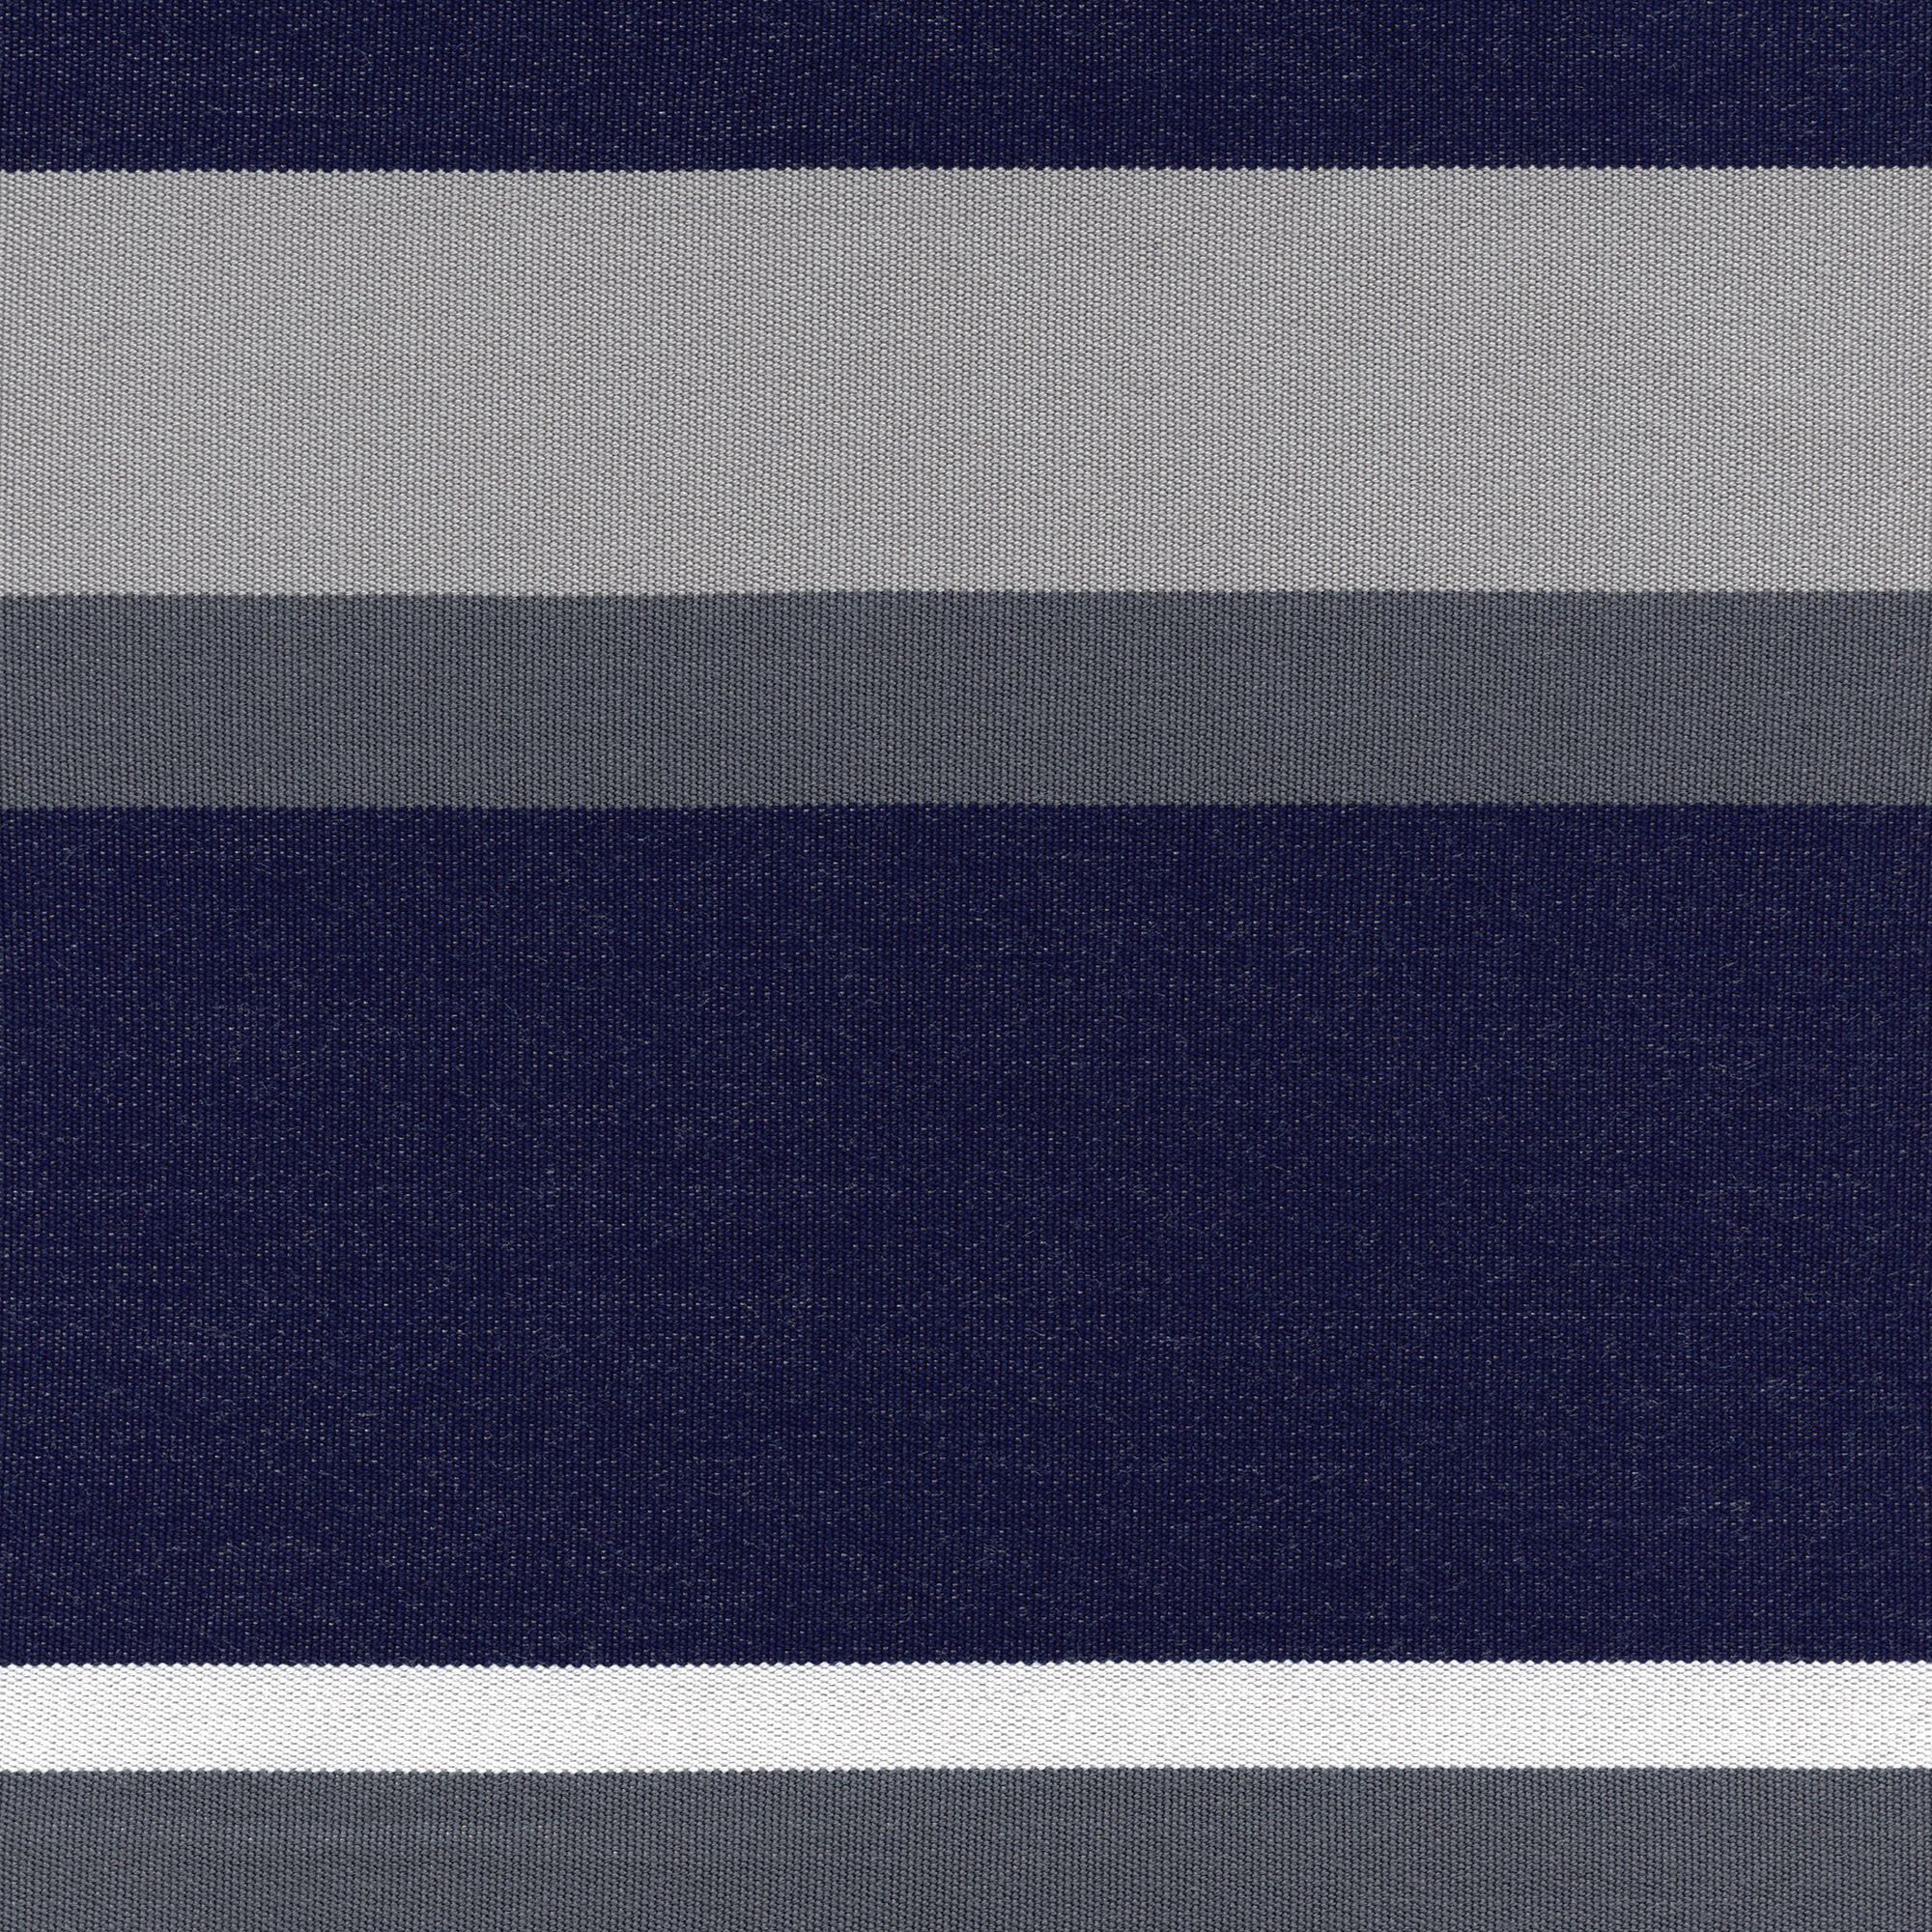 Fabric Color A – Reliant Coast 6670 Swatch